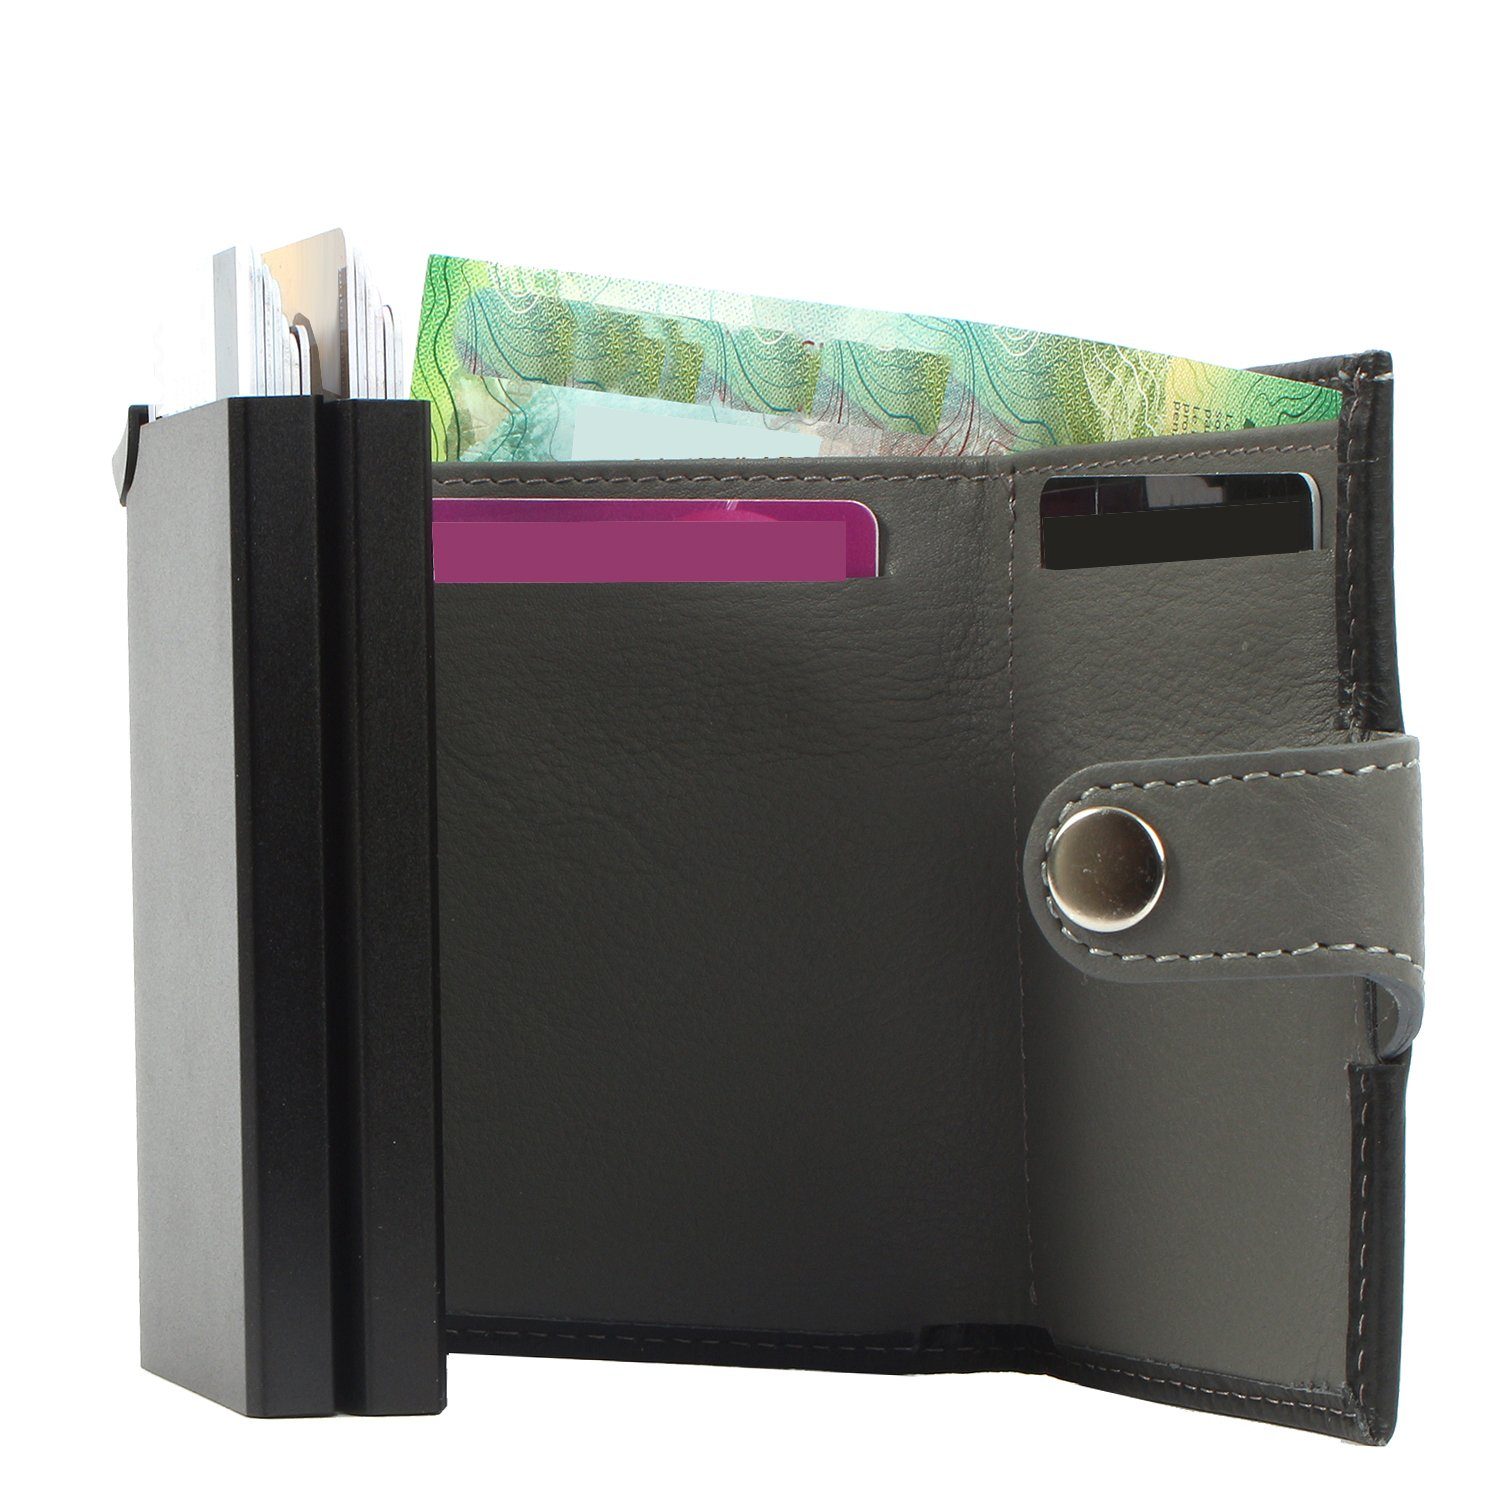 aus Mini leather, Geldbörse Upcycling Kreditkartenbörse Leder salmon noonyu RFID Margelisch double